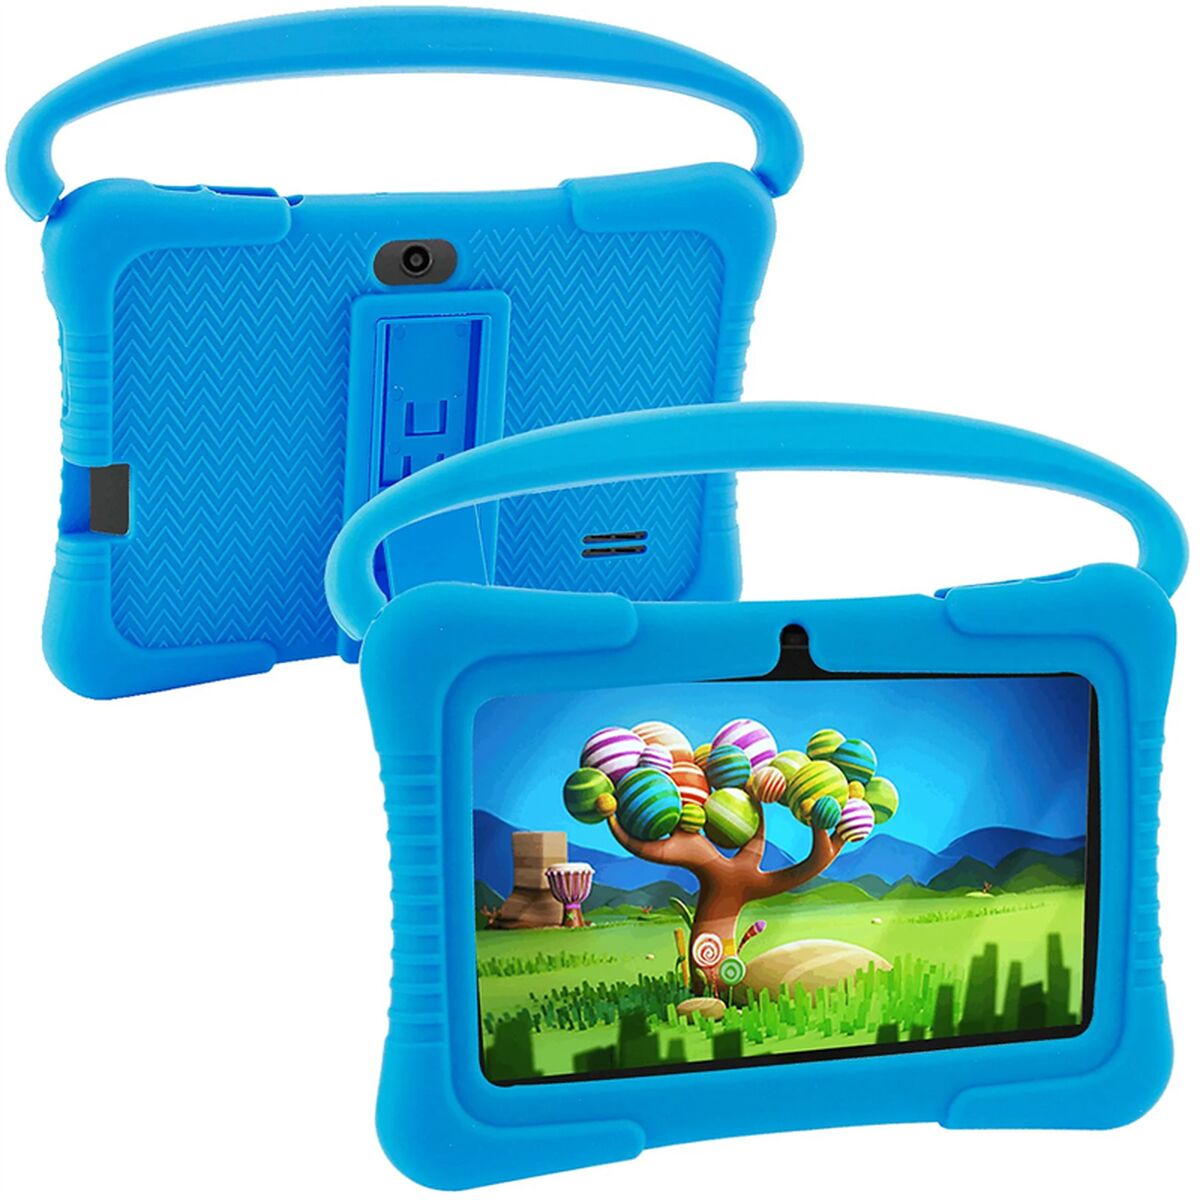 Interaktiv Tablet til Børn K705 Blå 32 GB 2 GB RAM 7"